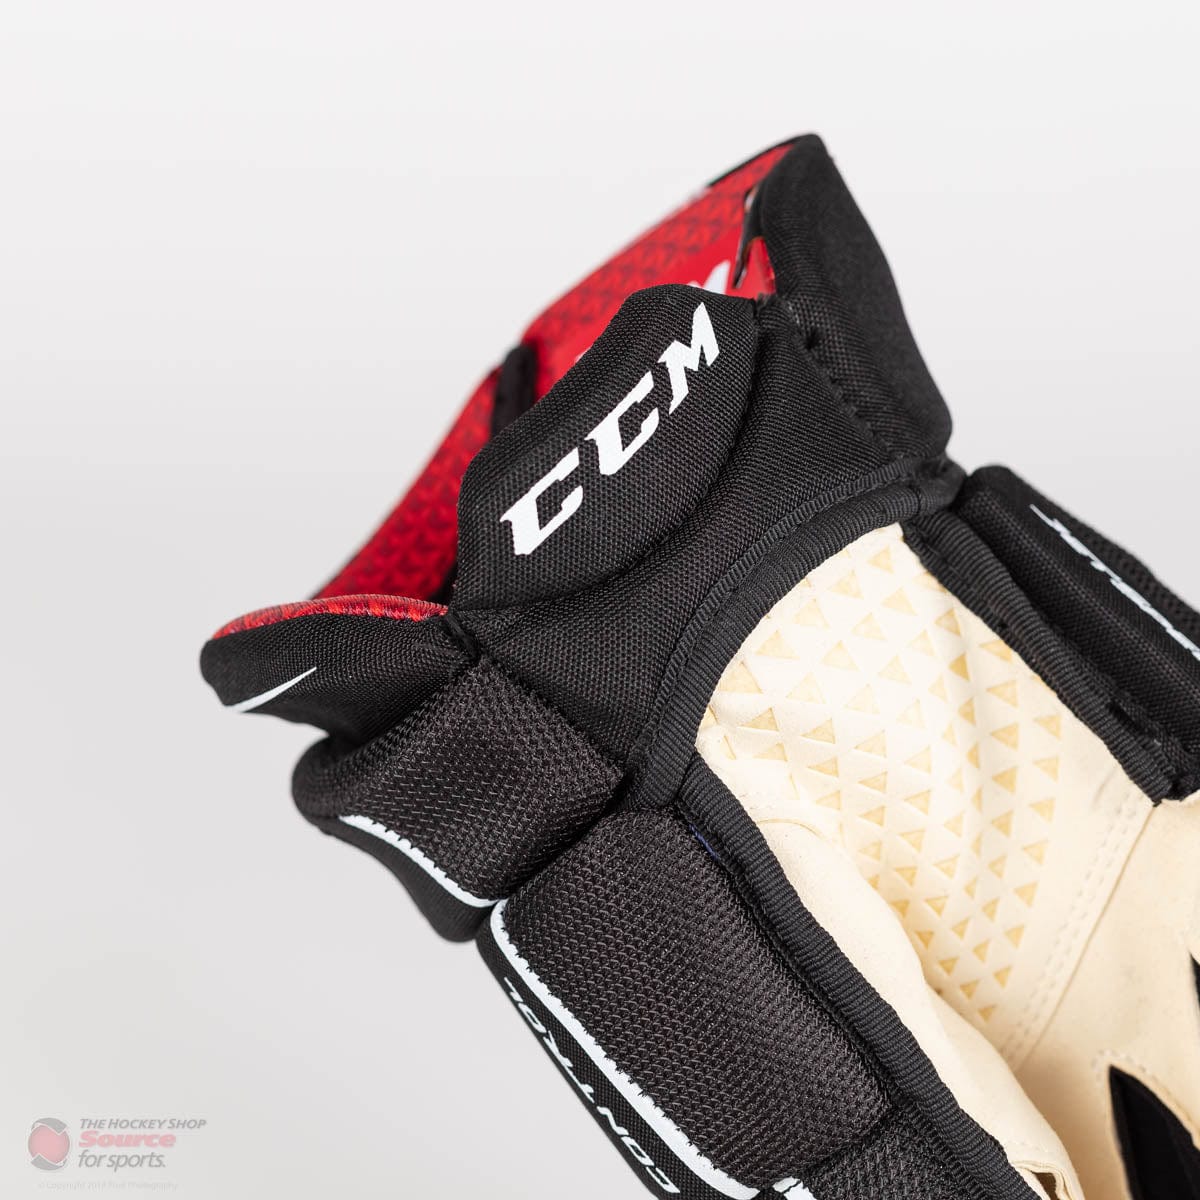 CCM Jetspeed Control Senior Hockey Gloves (2019)